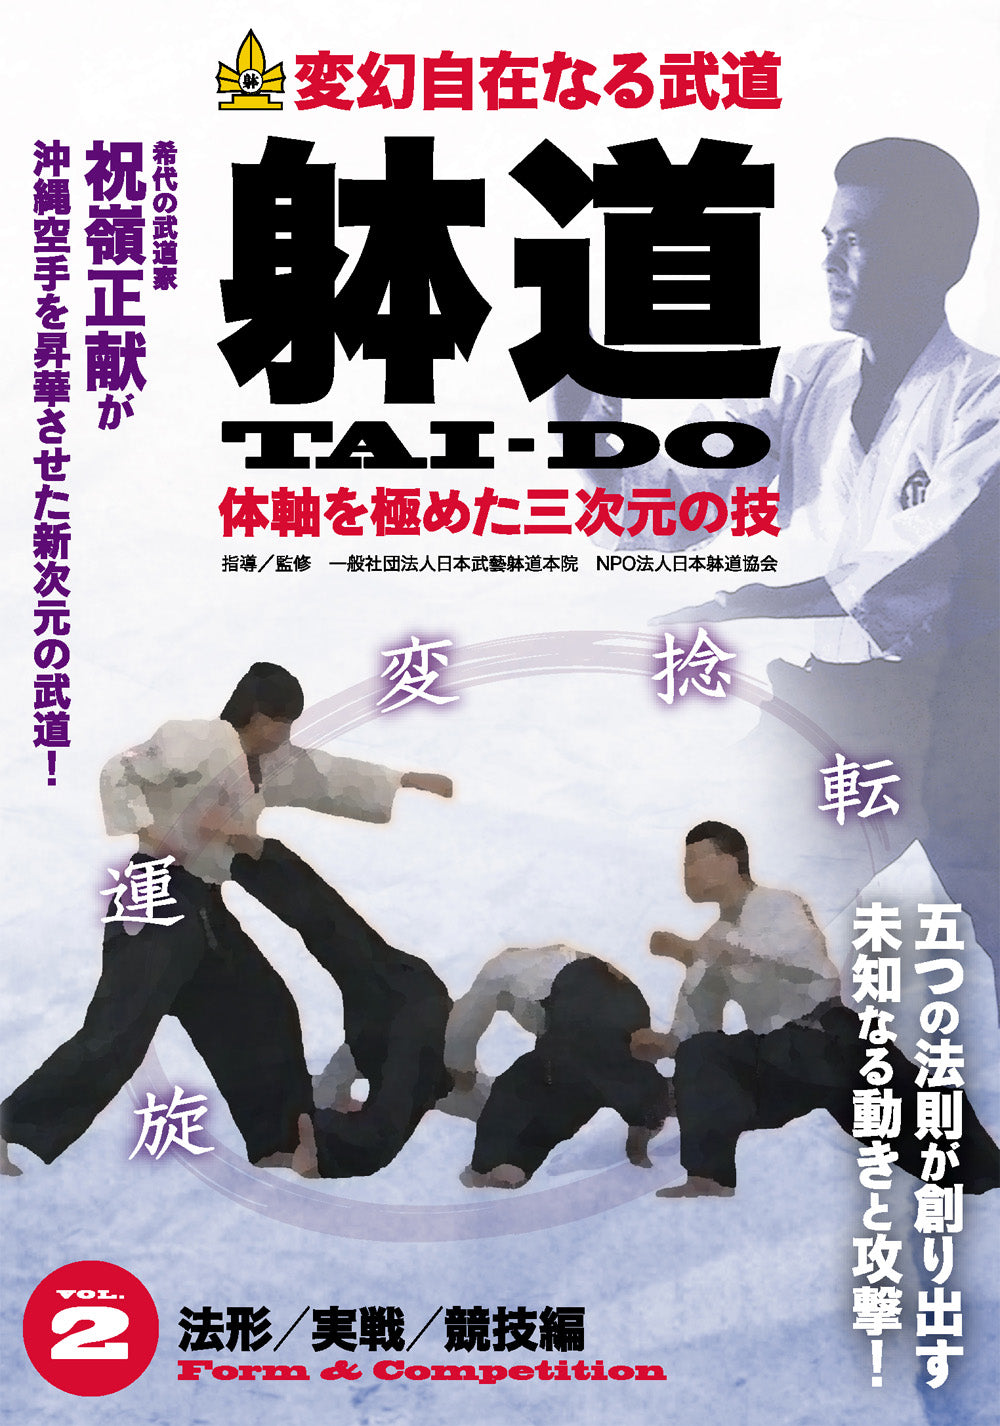 Taido DVD 2: Form & Competition by Seiken Shukumine